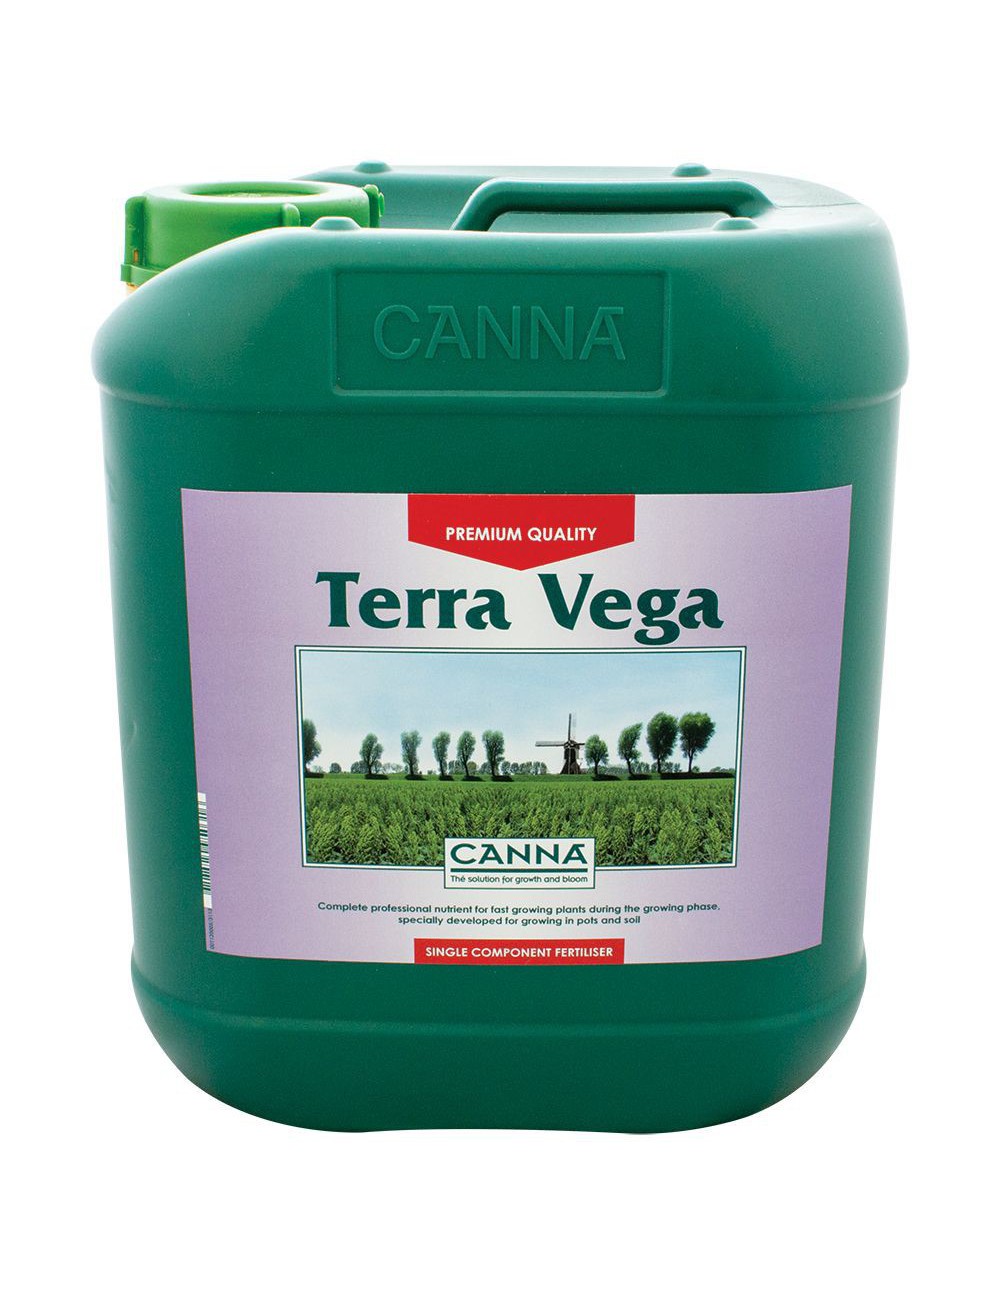 Terra Vega 5lts CANNA